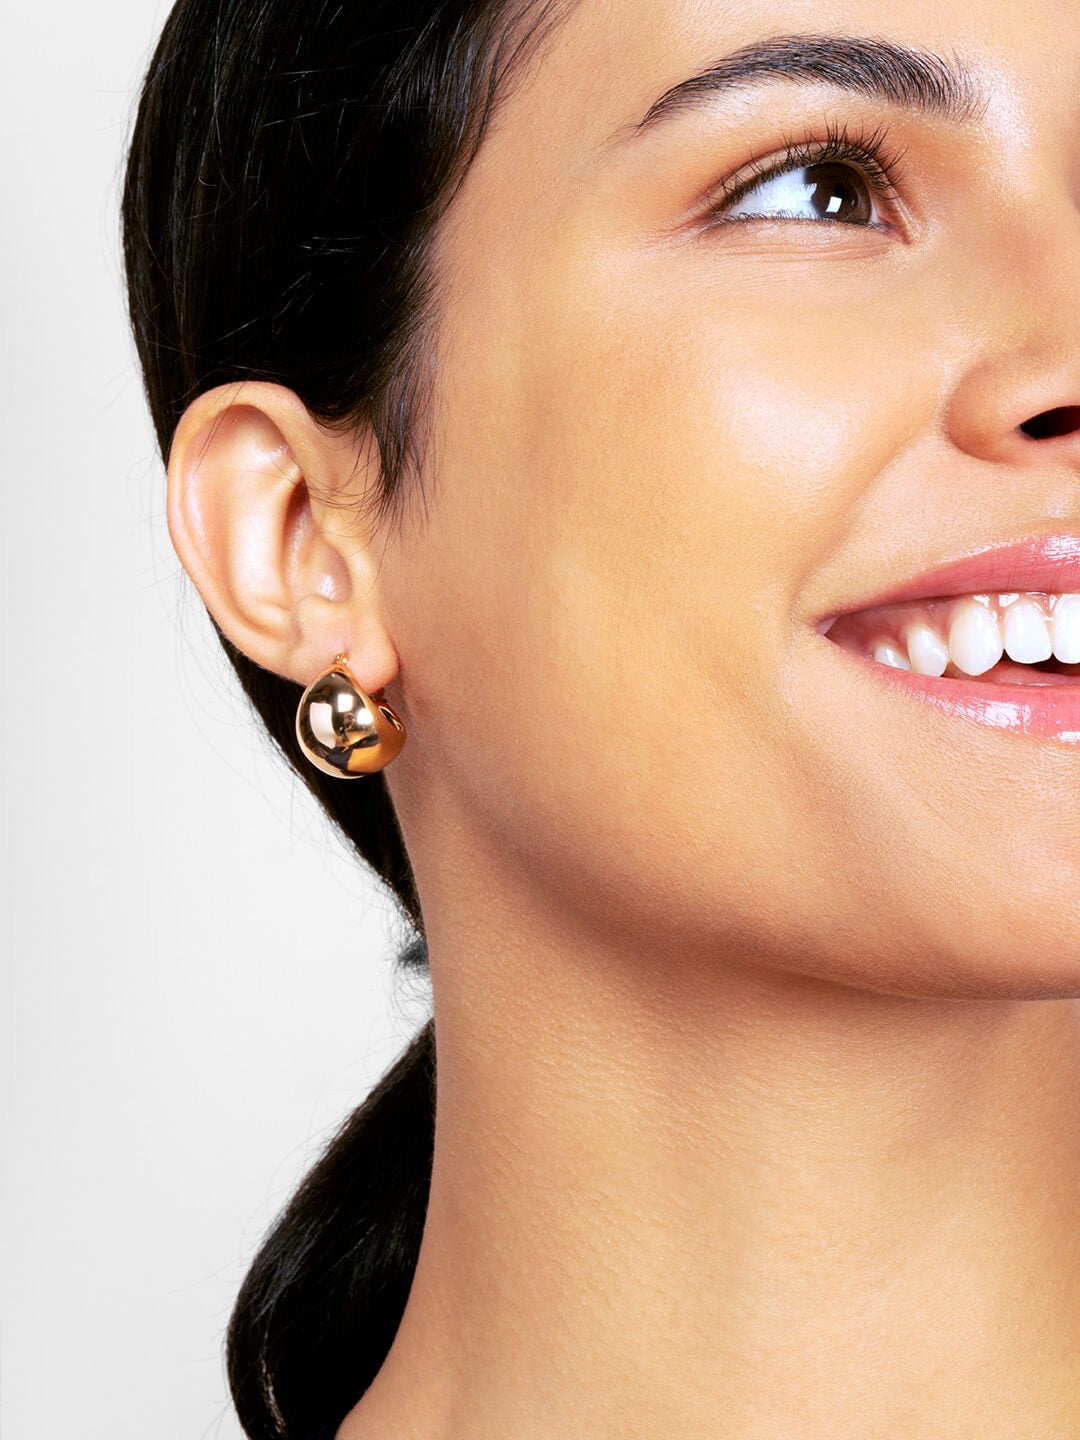 14k gold plate earrings